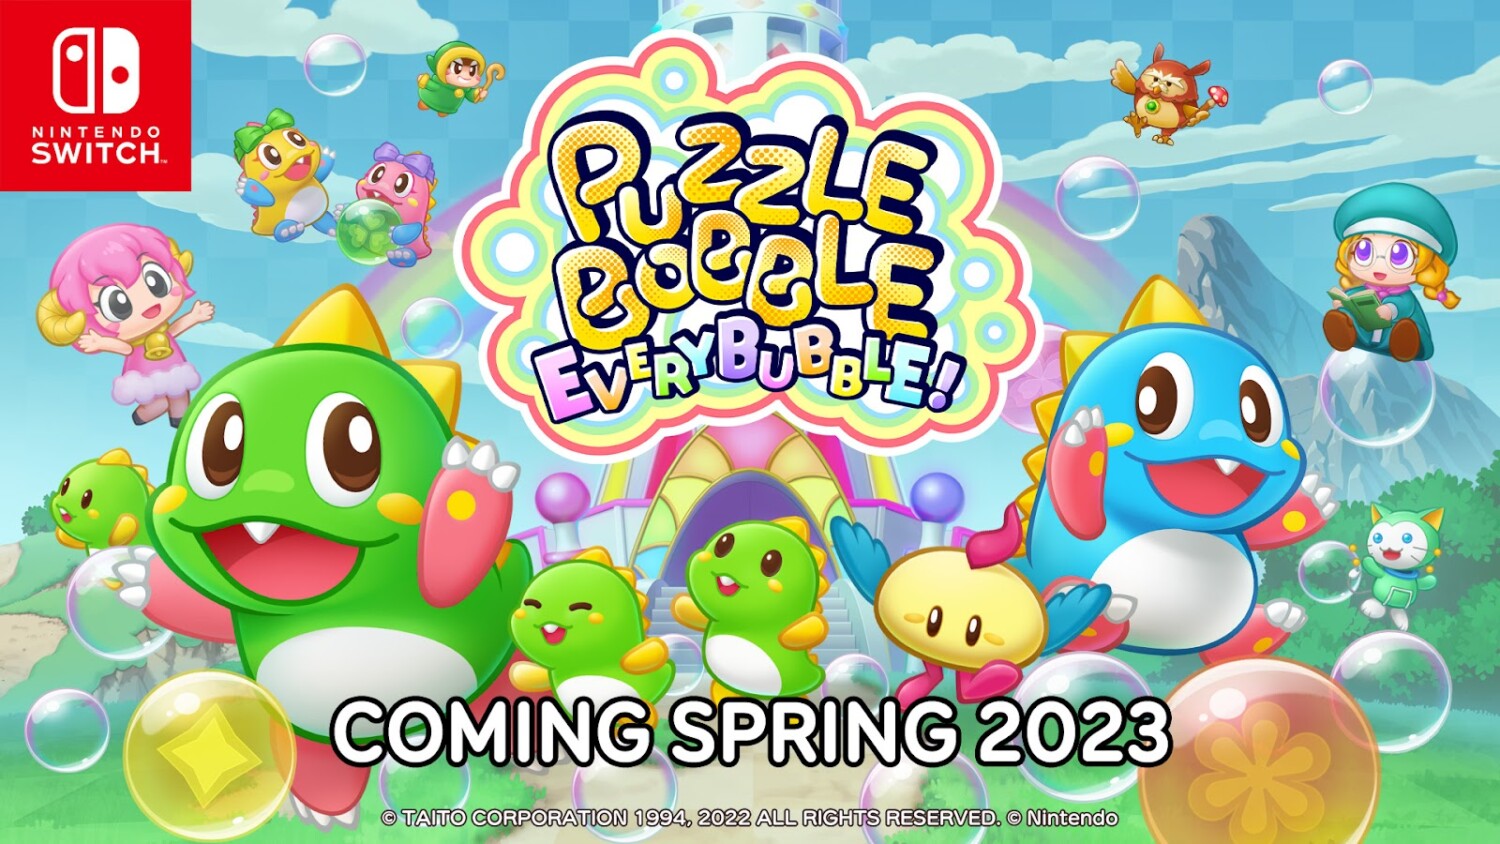 Puzzle Bobble Everybubble! announced for Switch - Gematsu